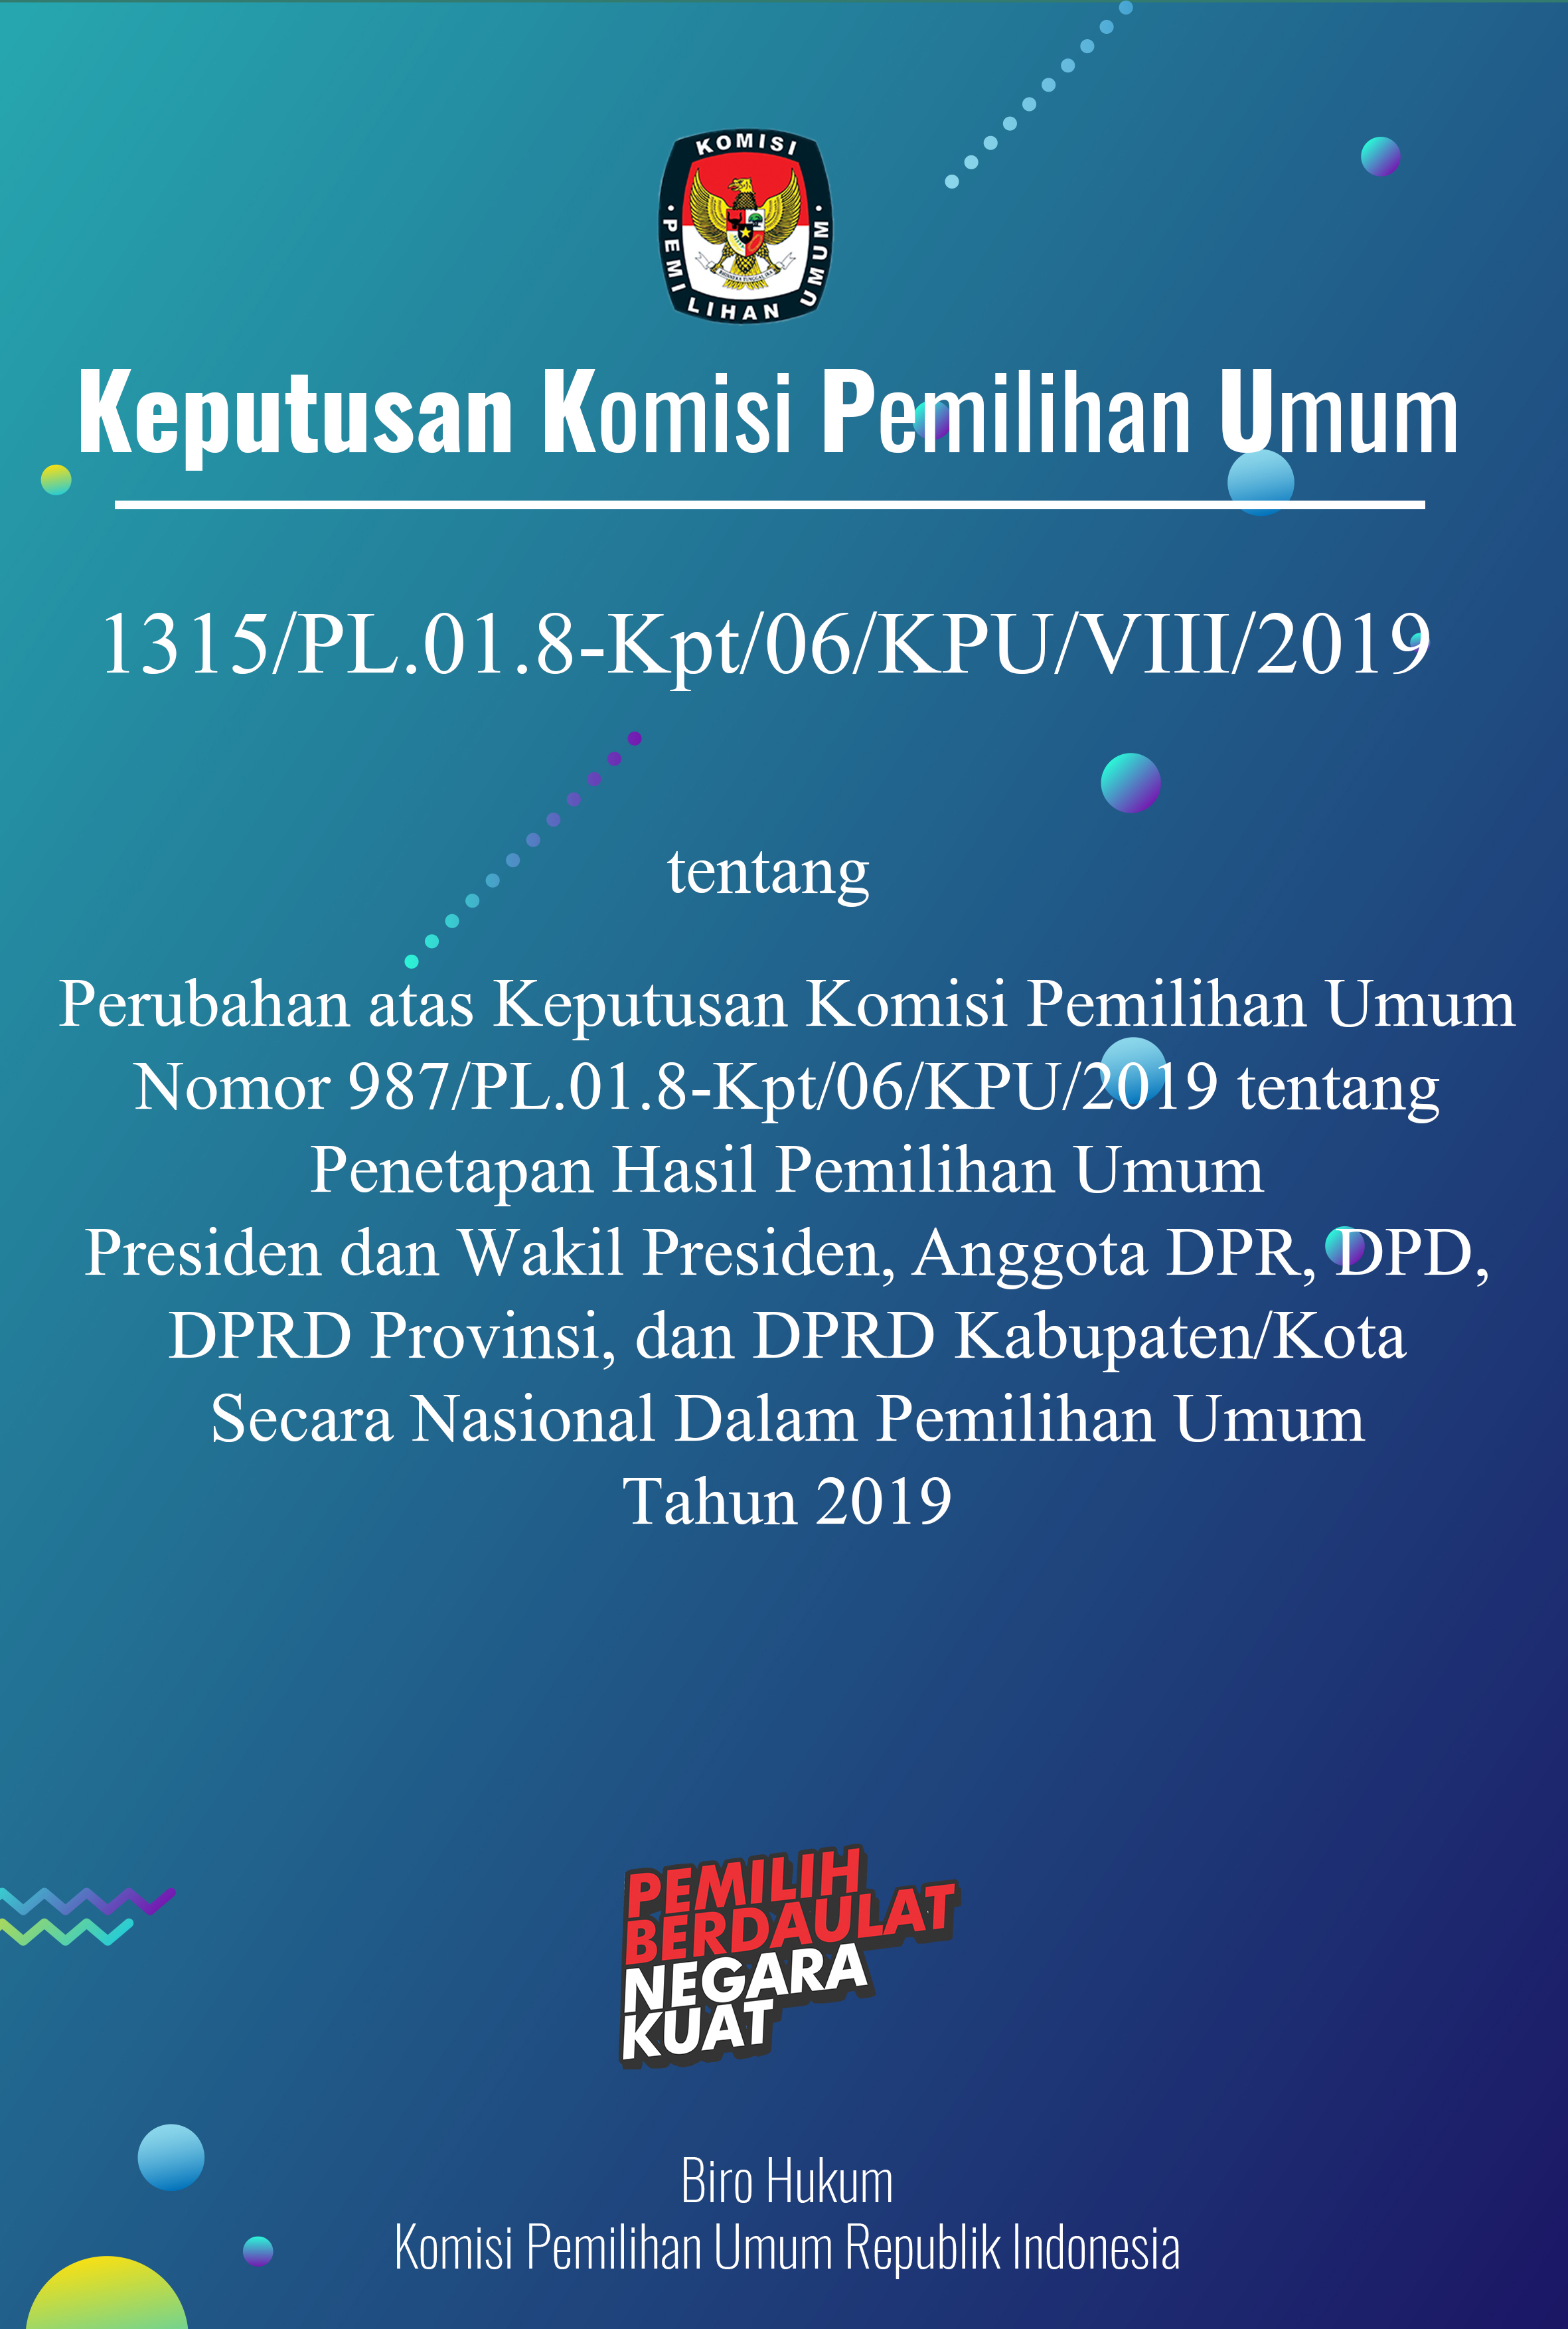 Keputusan komisi pemilihan umum nomor 1315/PL.01.8-Kpt/06/KPU/VIII/2019